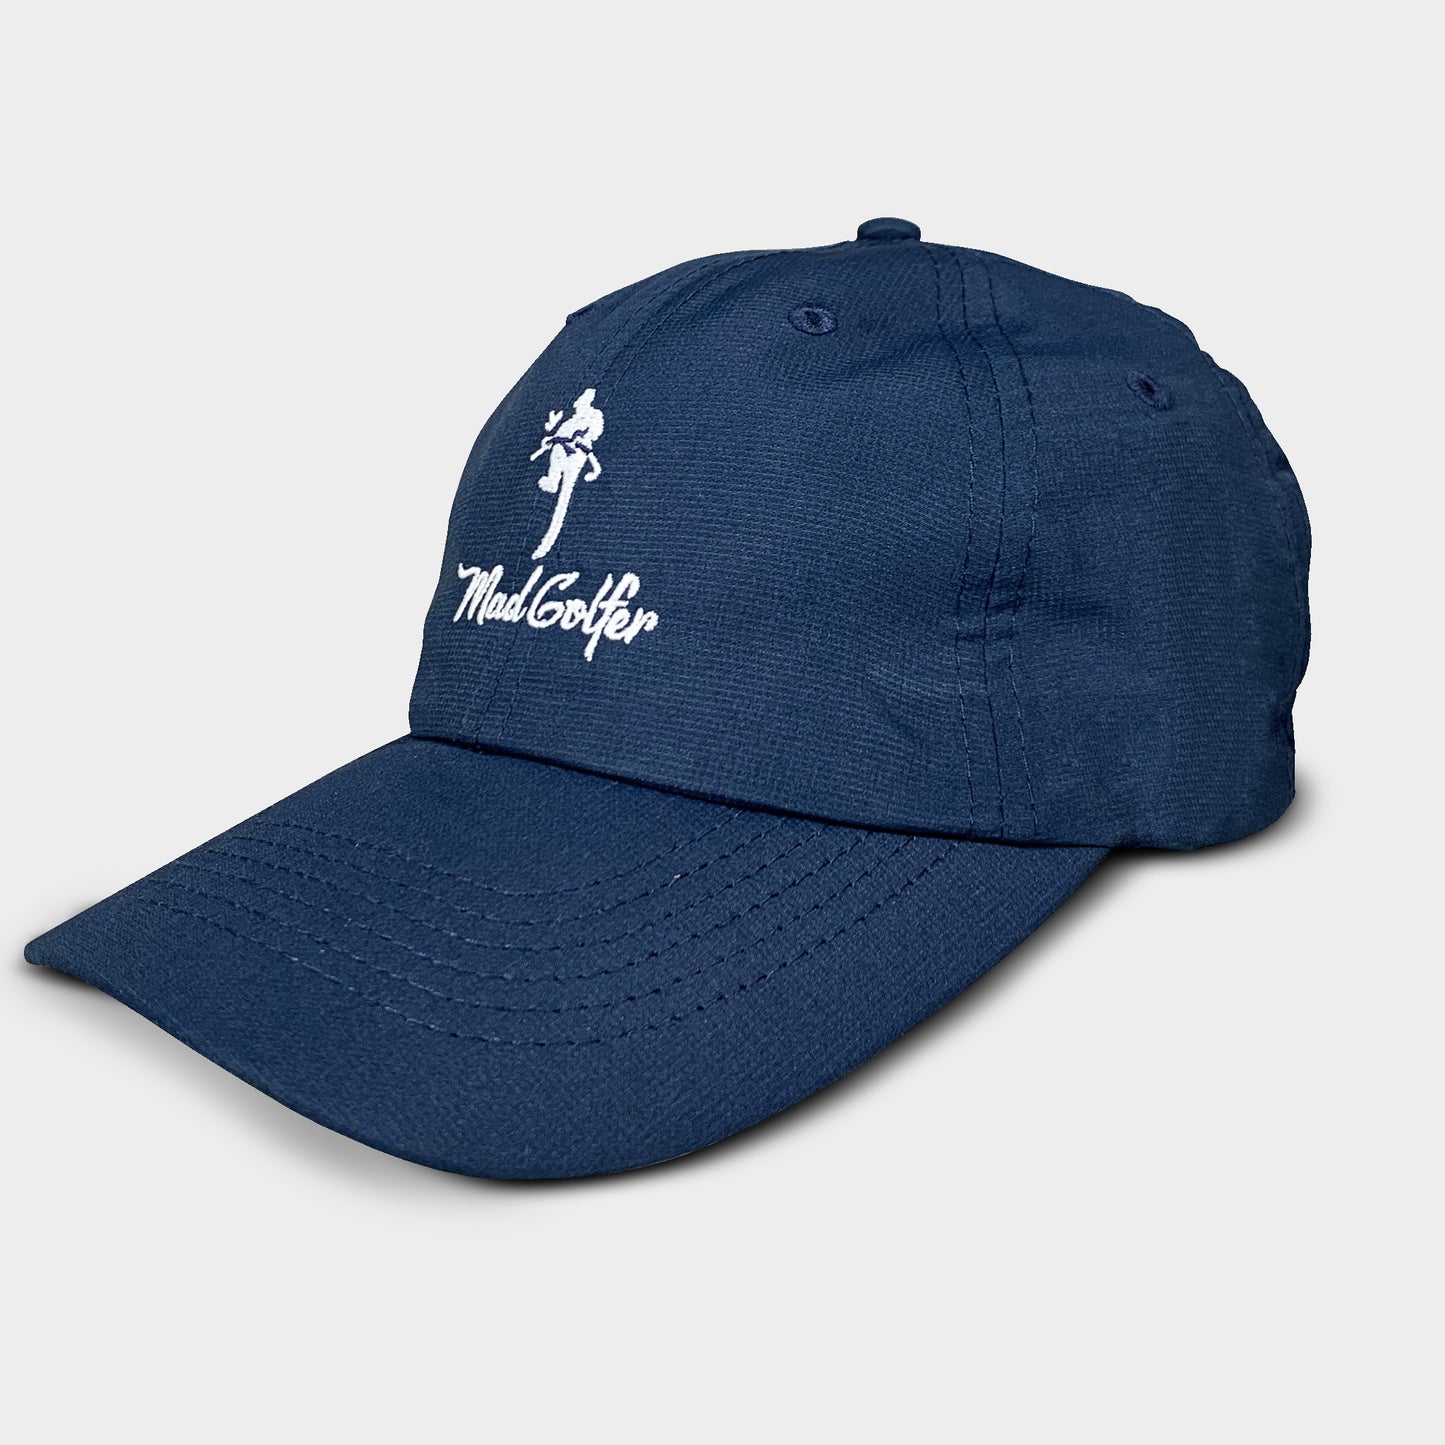 MadGolfer Hat - Navy